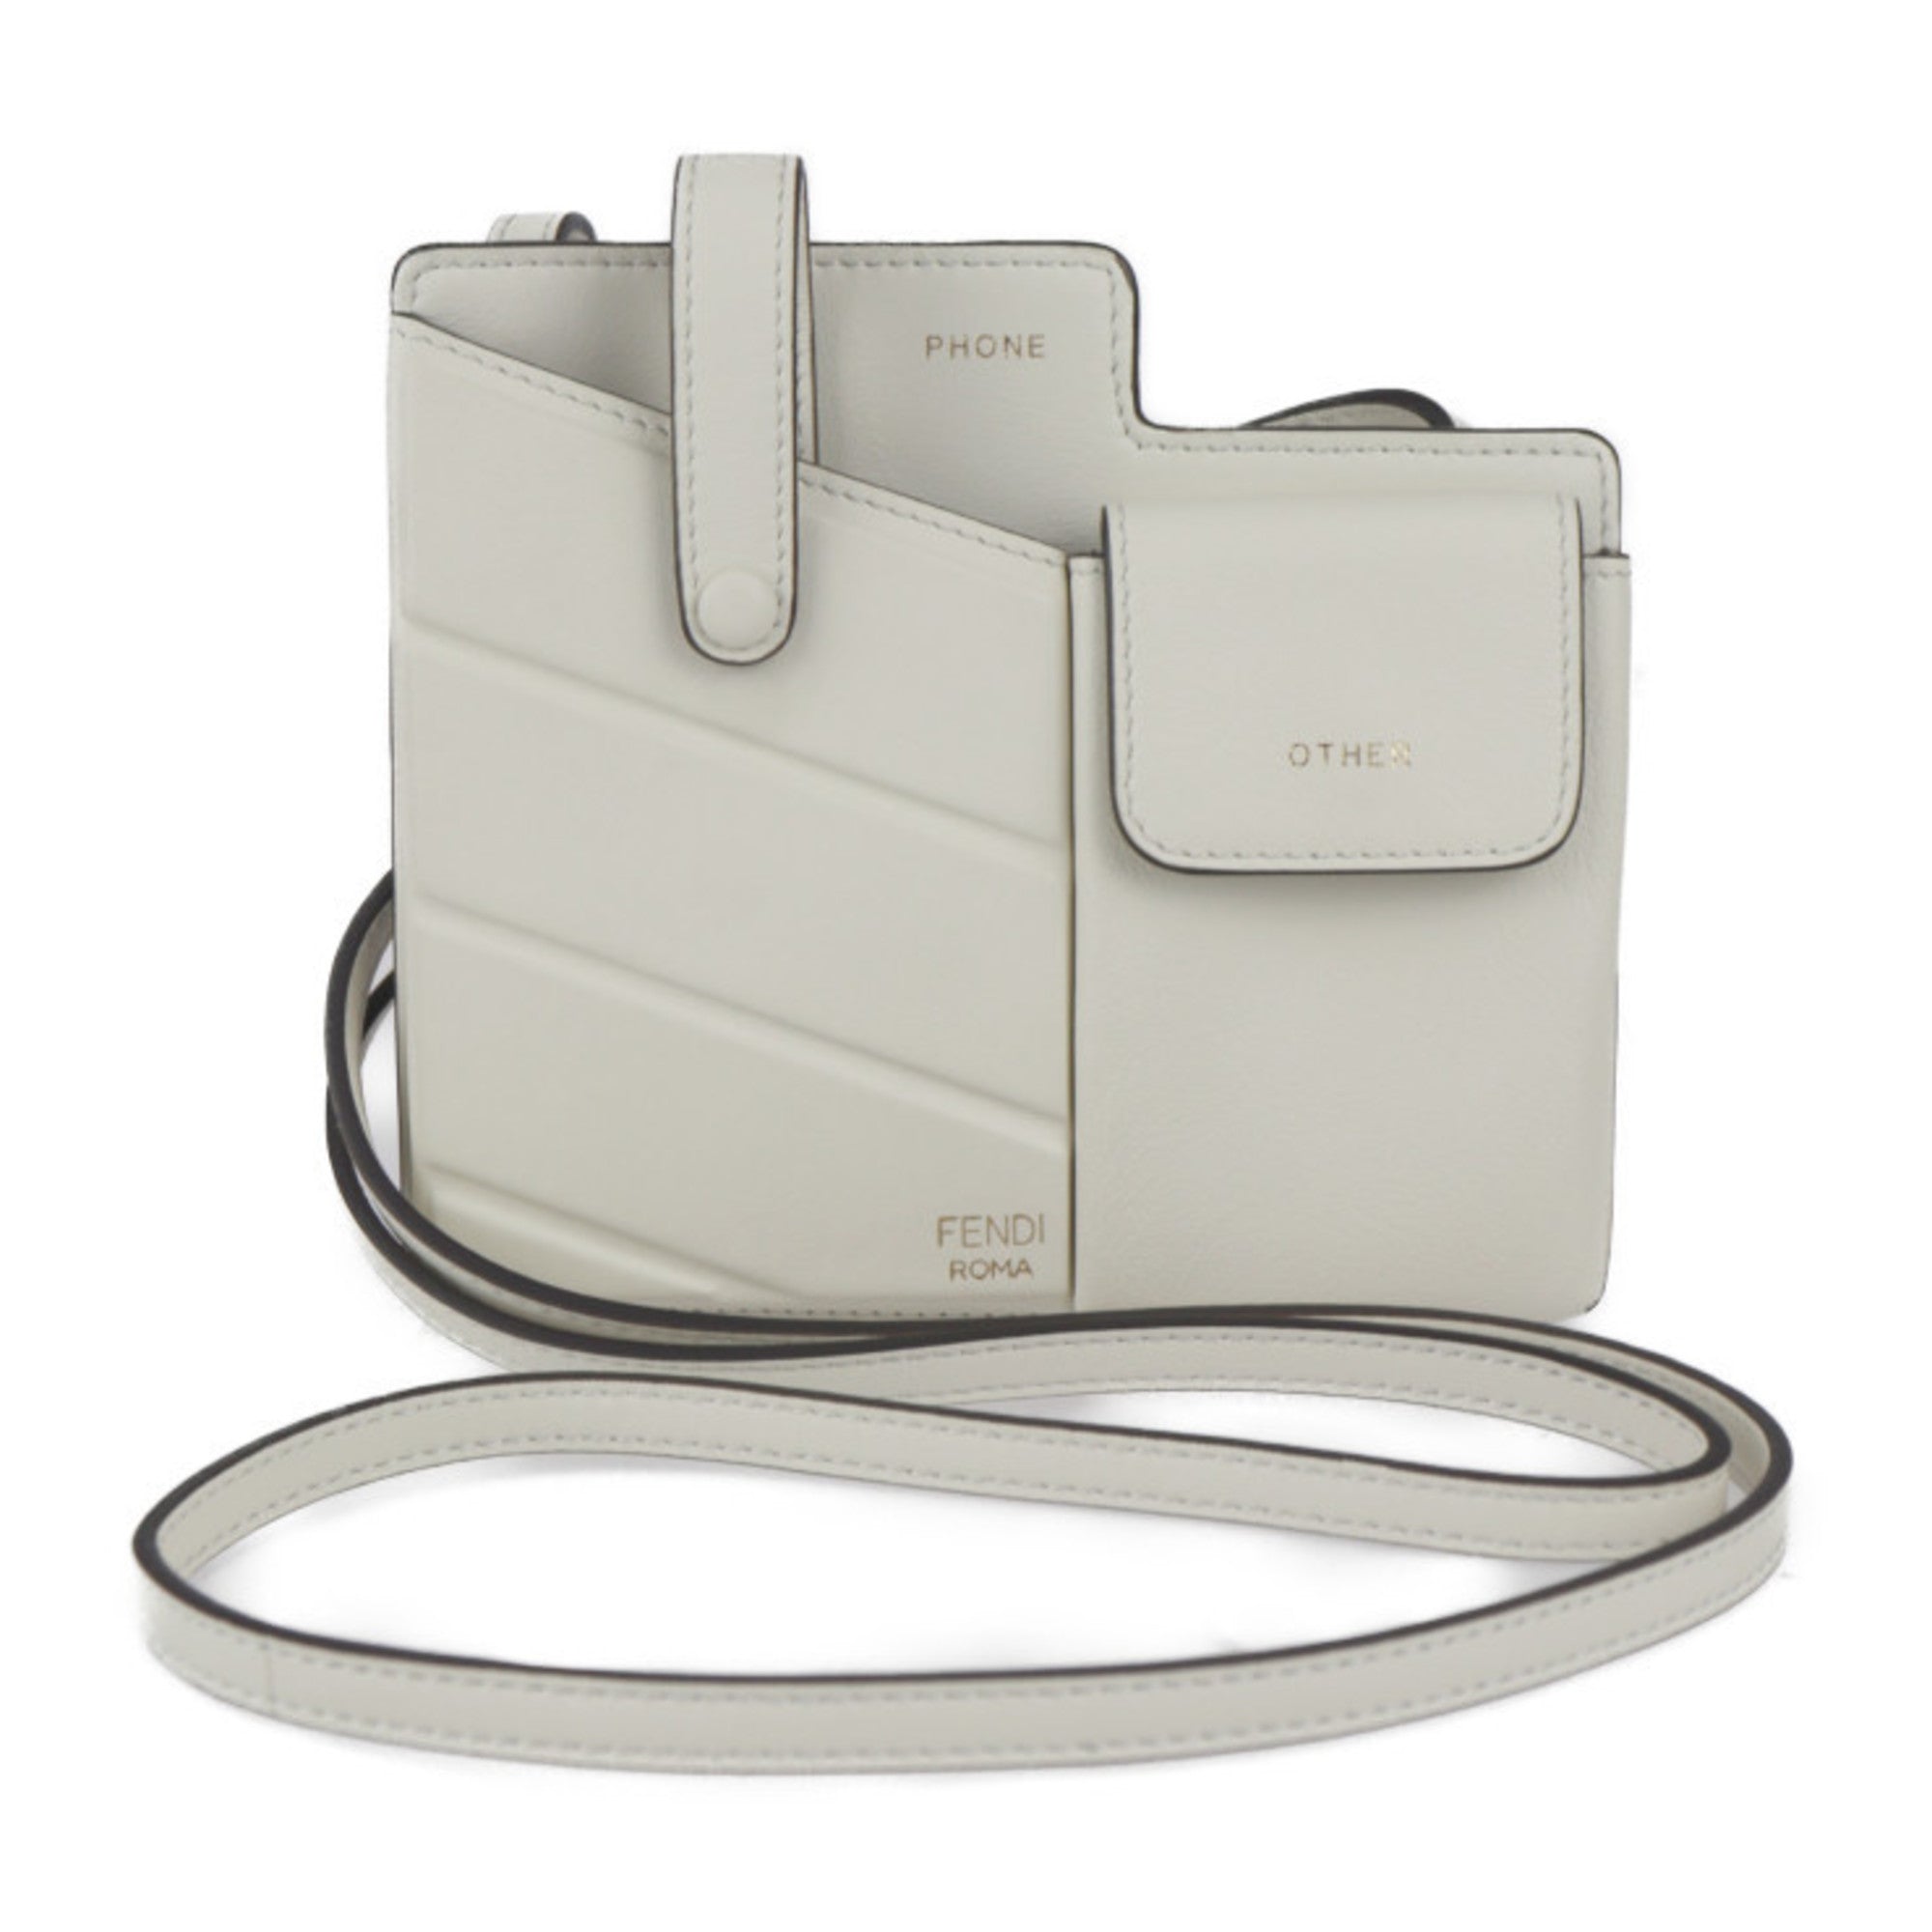 FENDI Phone Pouch Orlock Shoulder Bag 7AS131 Calf Leather Light Gray G